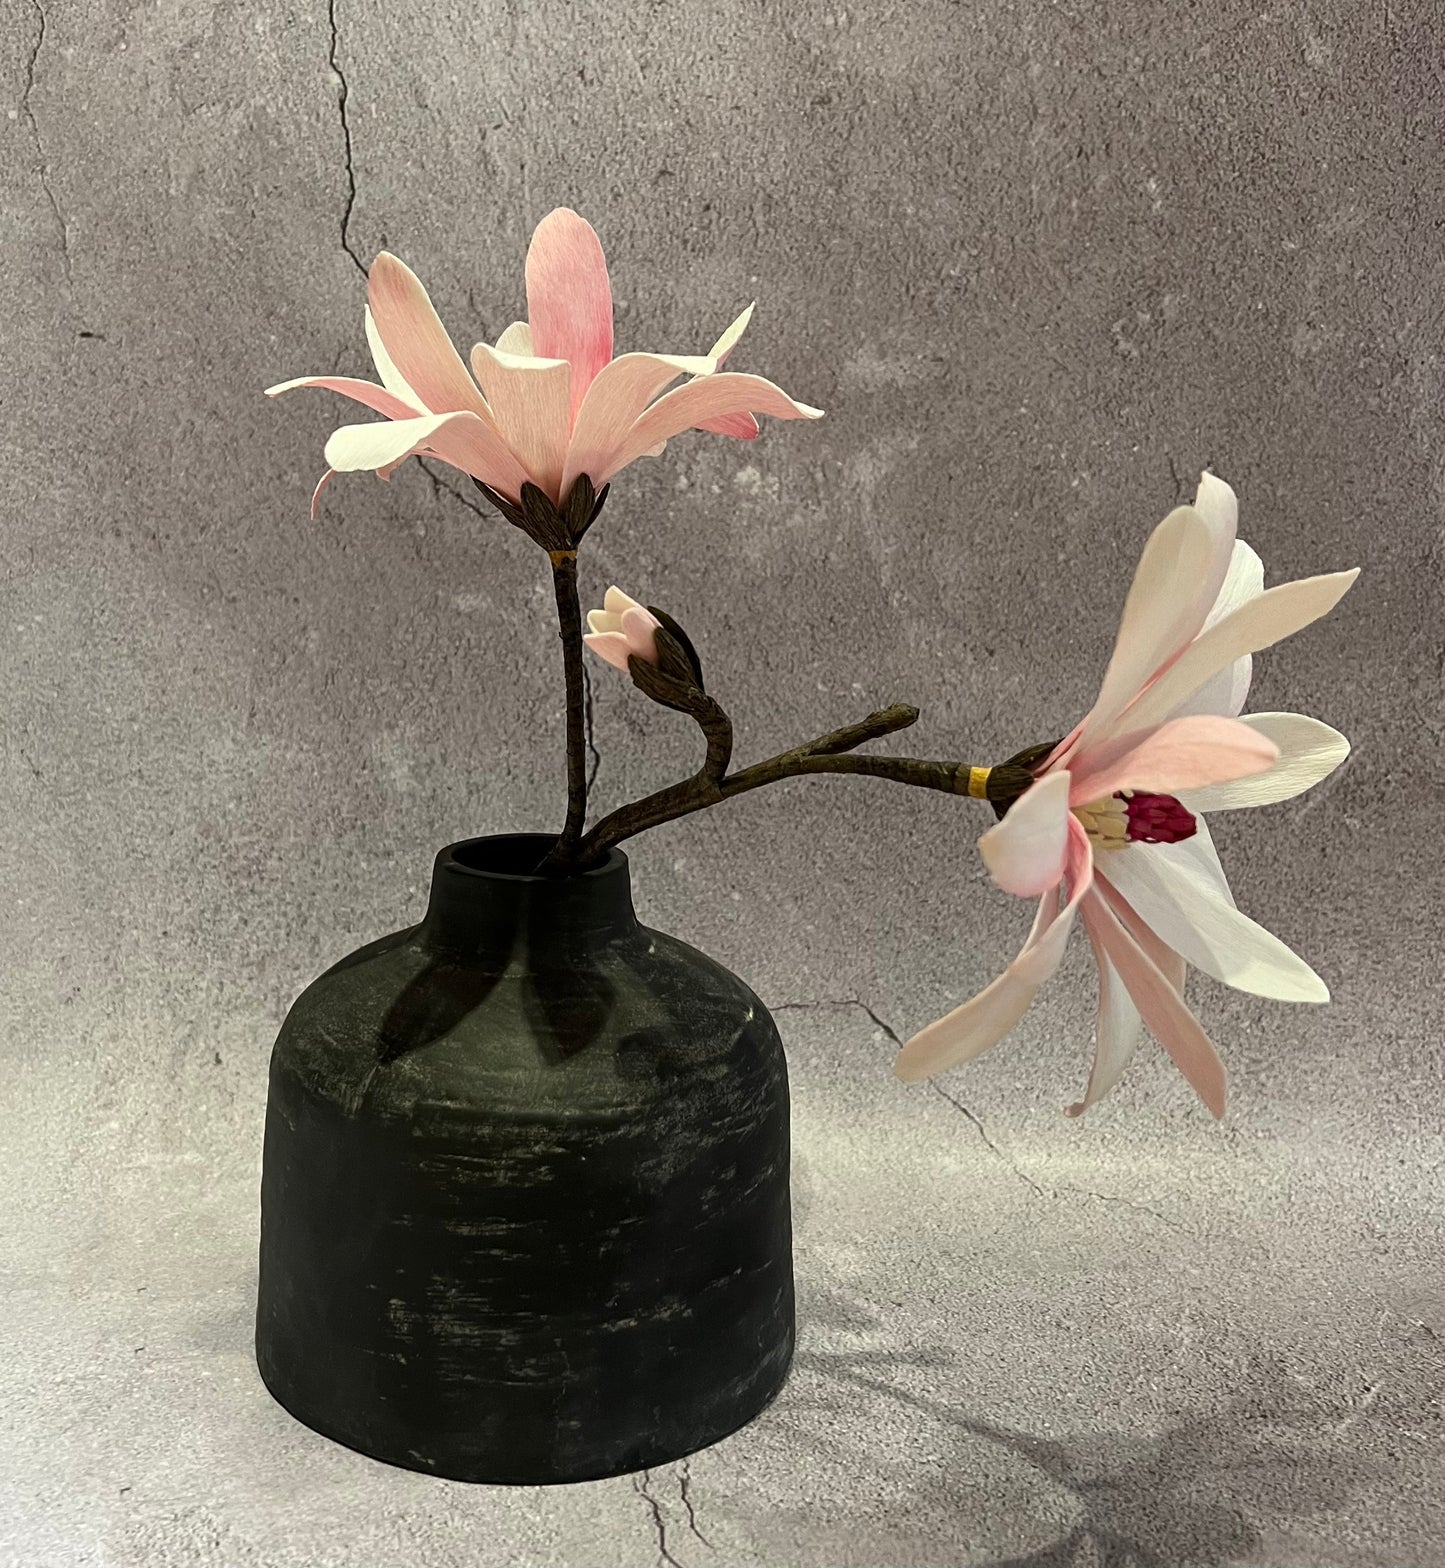 Star Magnolias in vase